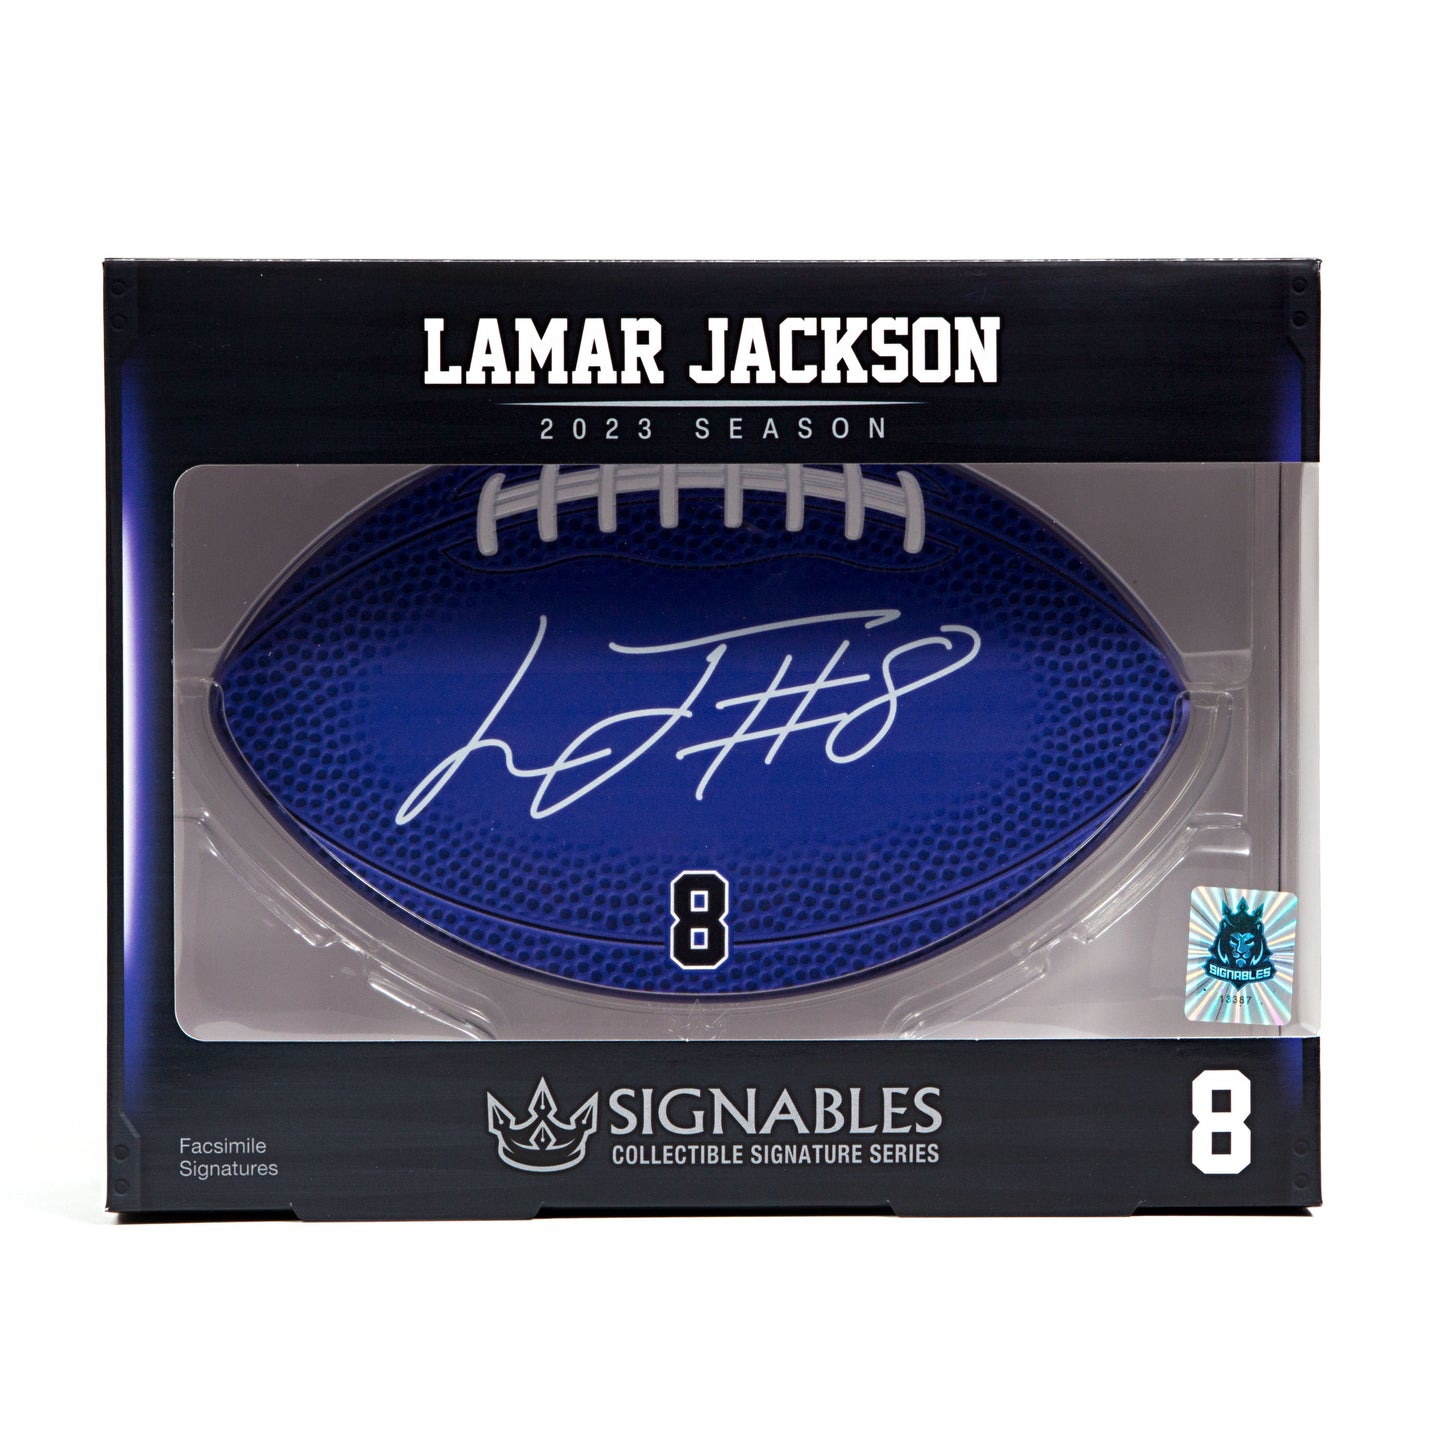 Lamar Jackson NFLPA 2023 Sports Collectible Digitally Signed